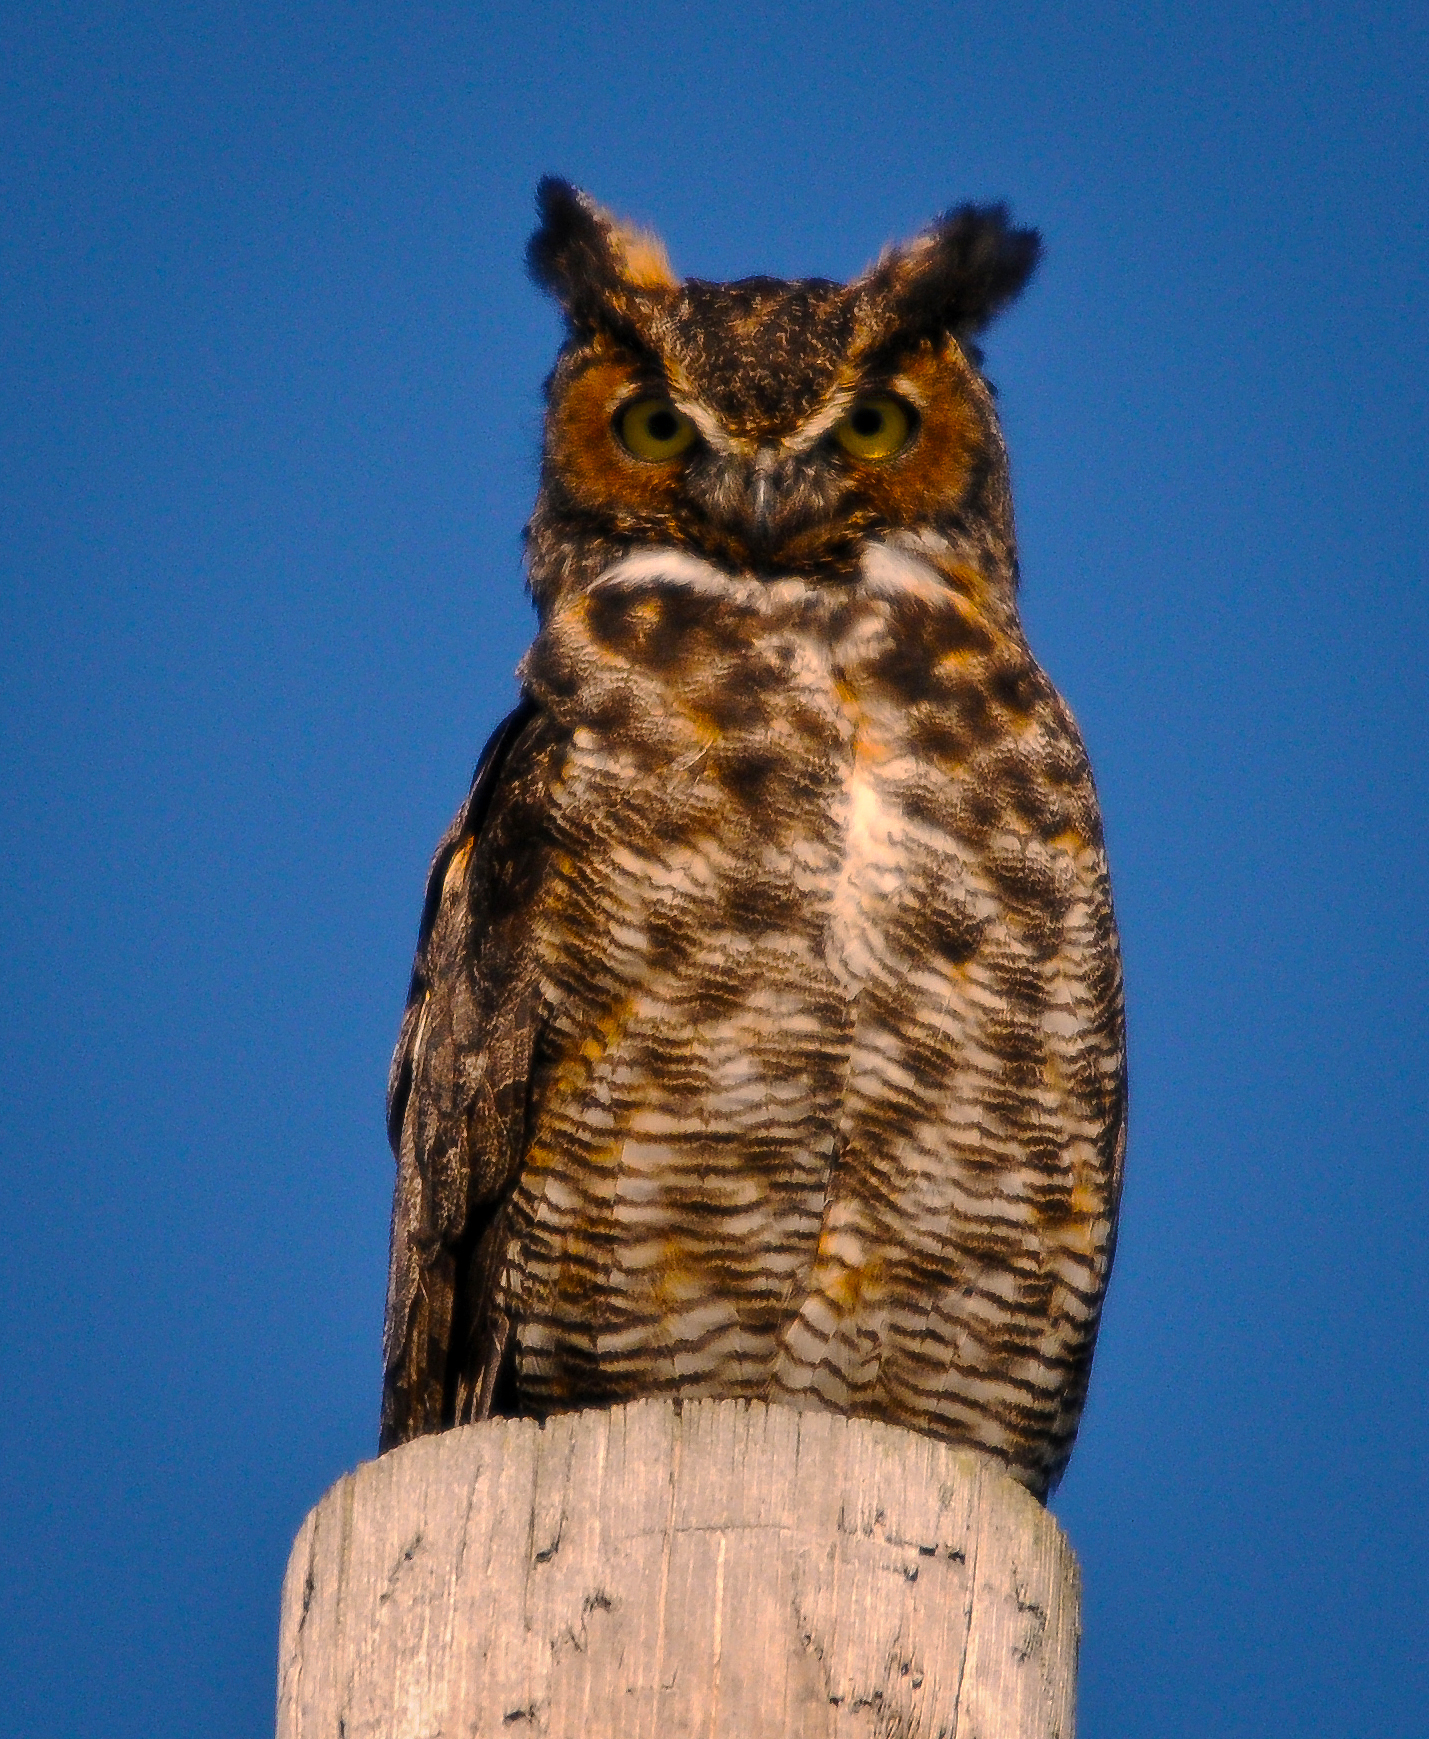 Great horned owl by Bob Schifo